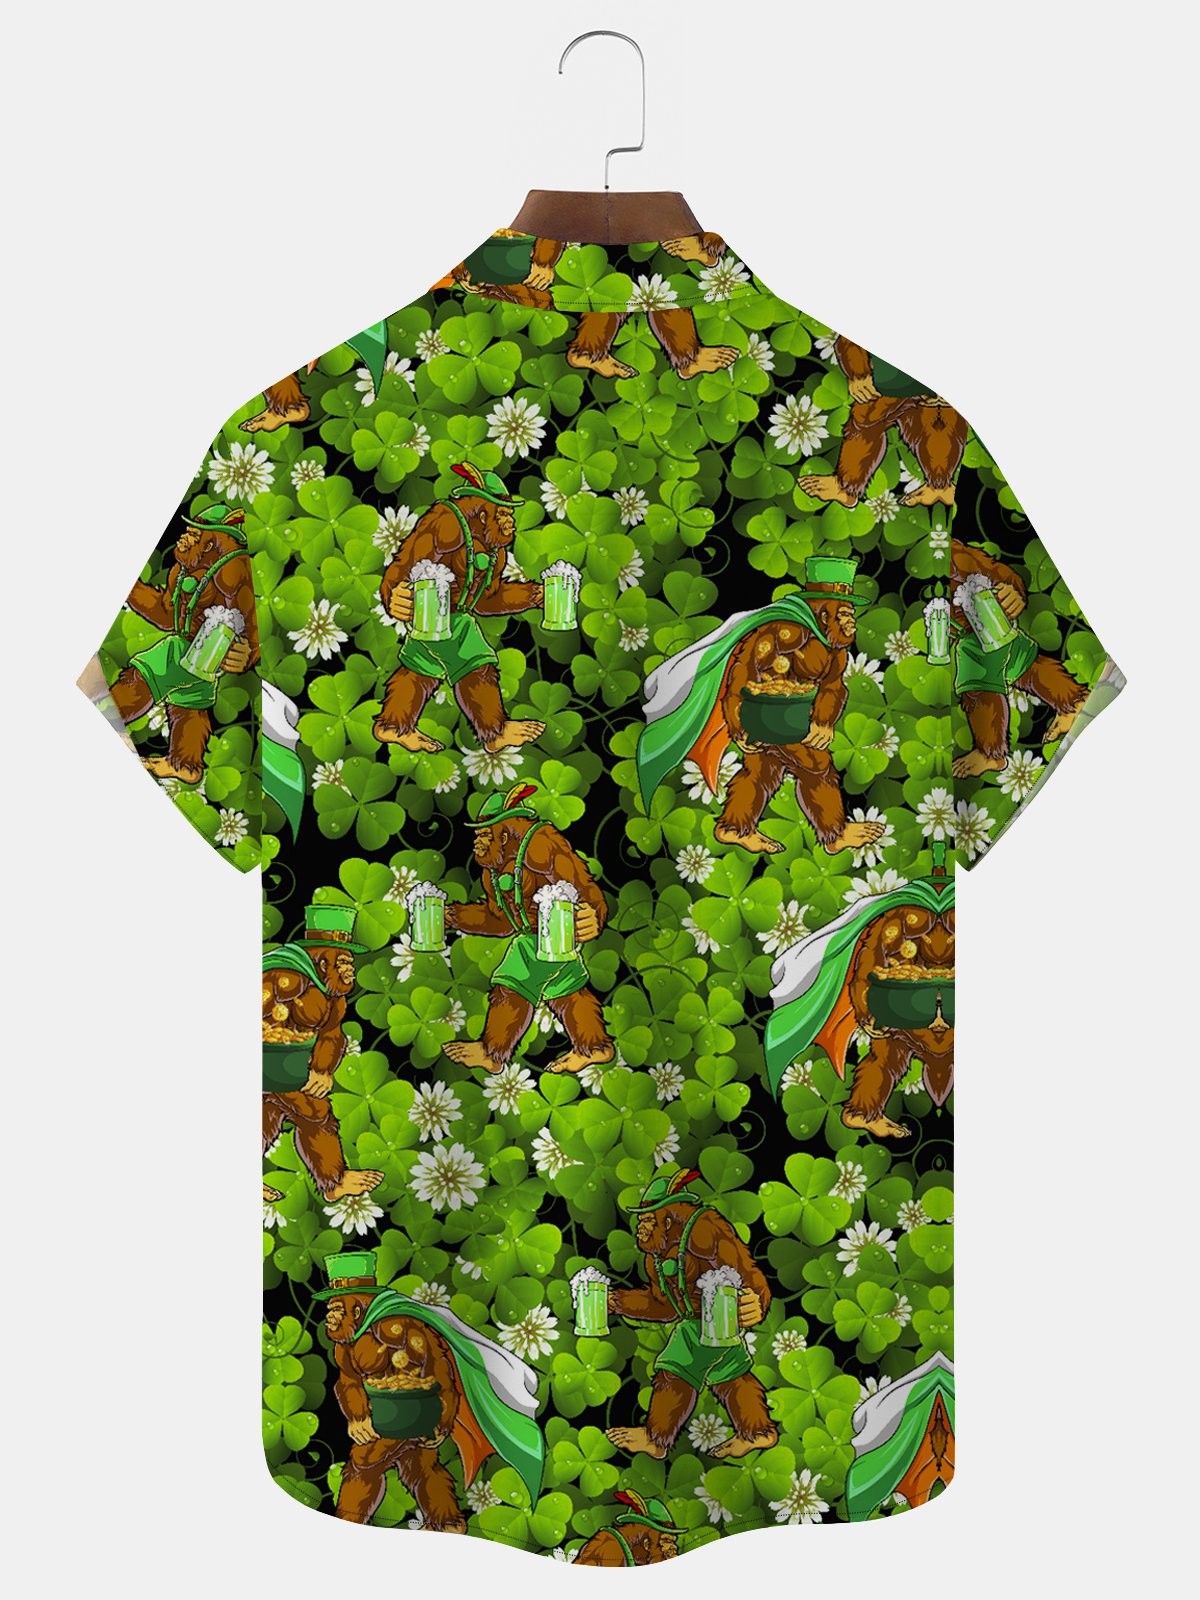 Royaura St. Patrick's Green Men's Hawaiian Shirts Big Foot Easy Care Aloha Camp Pocket Shirts Plus Size